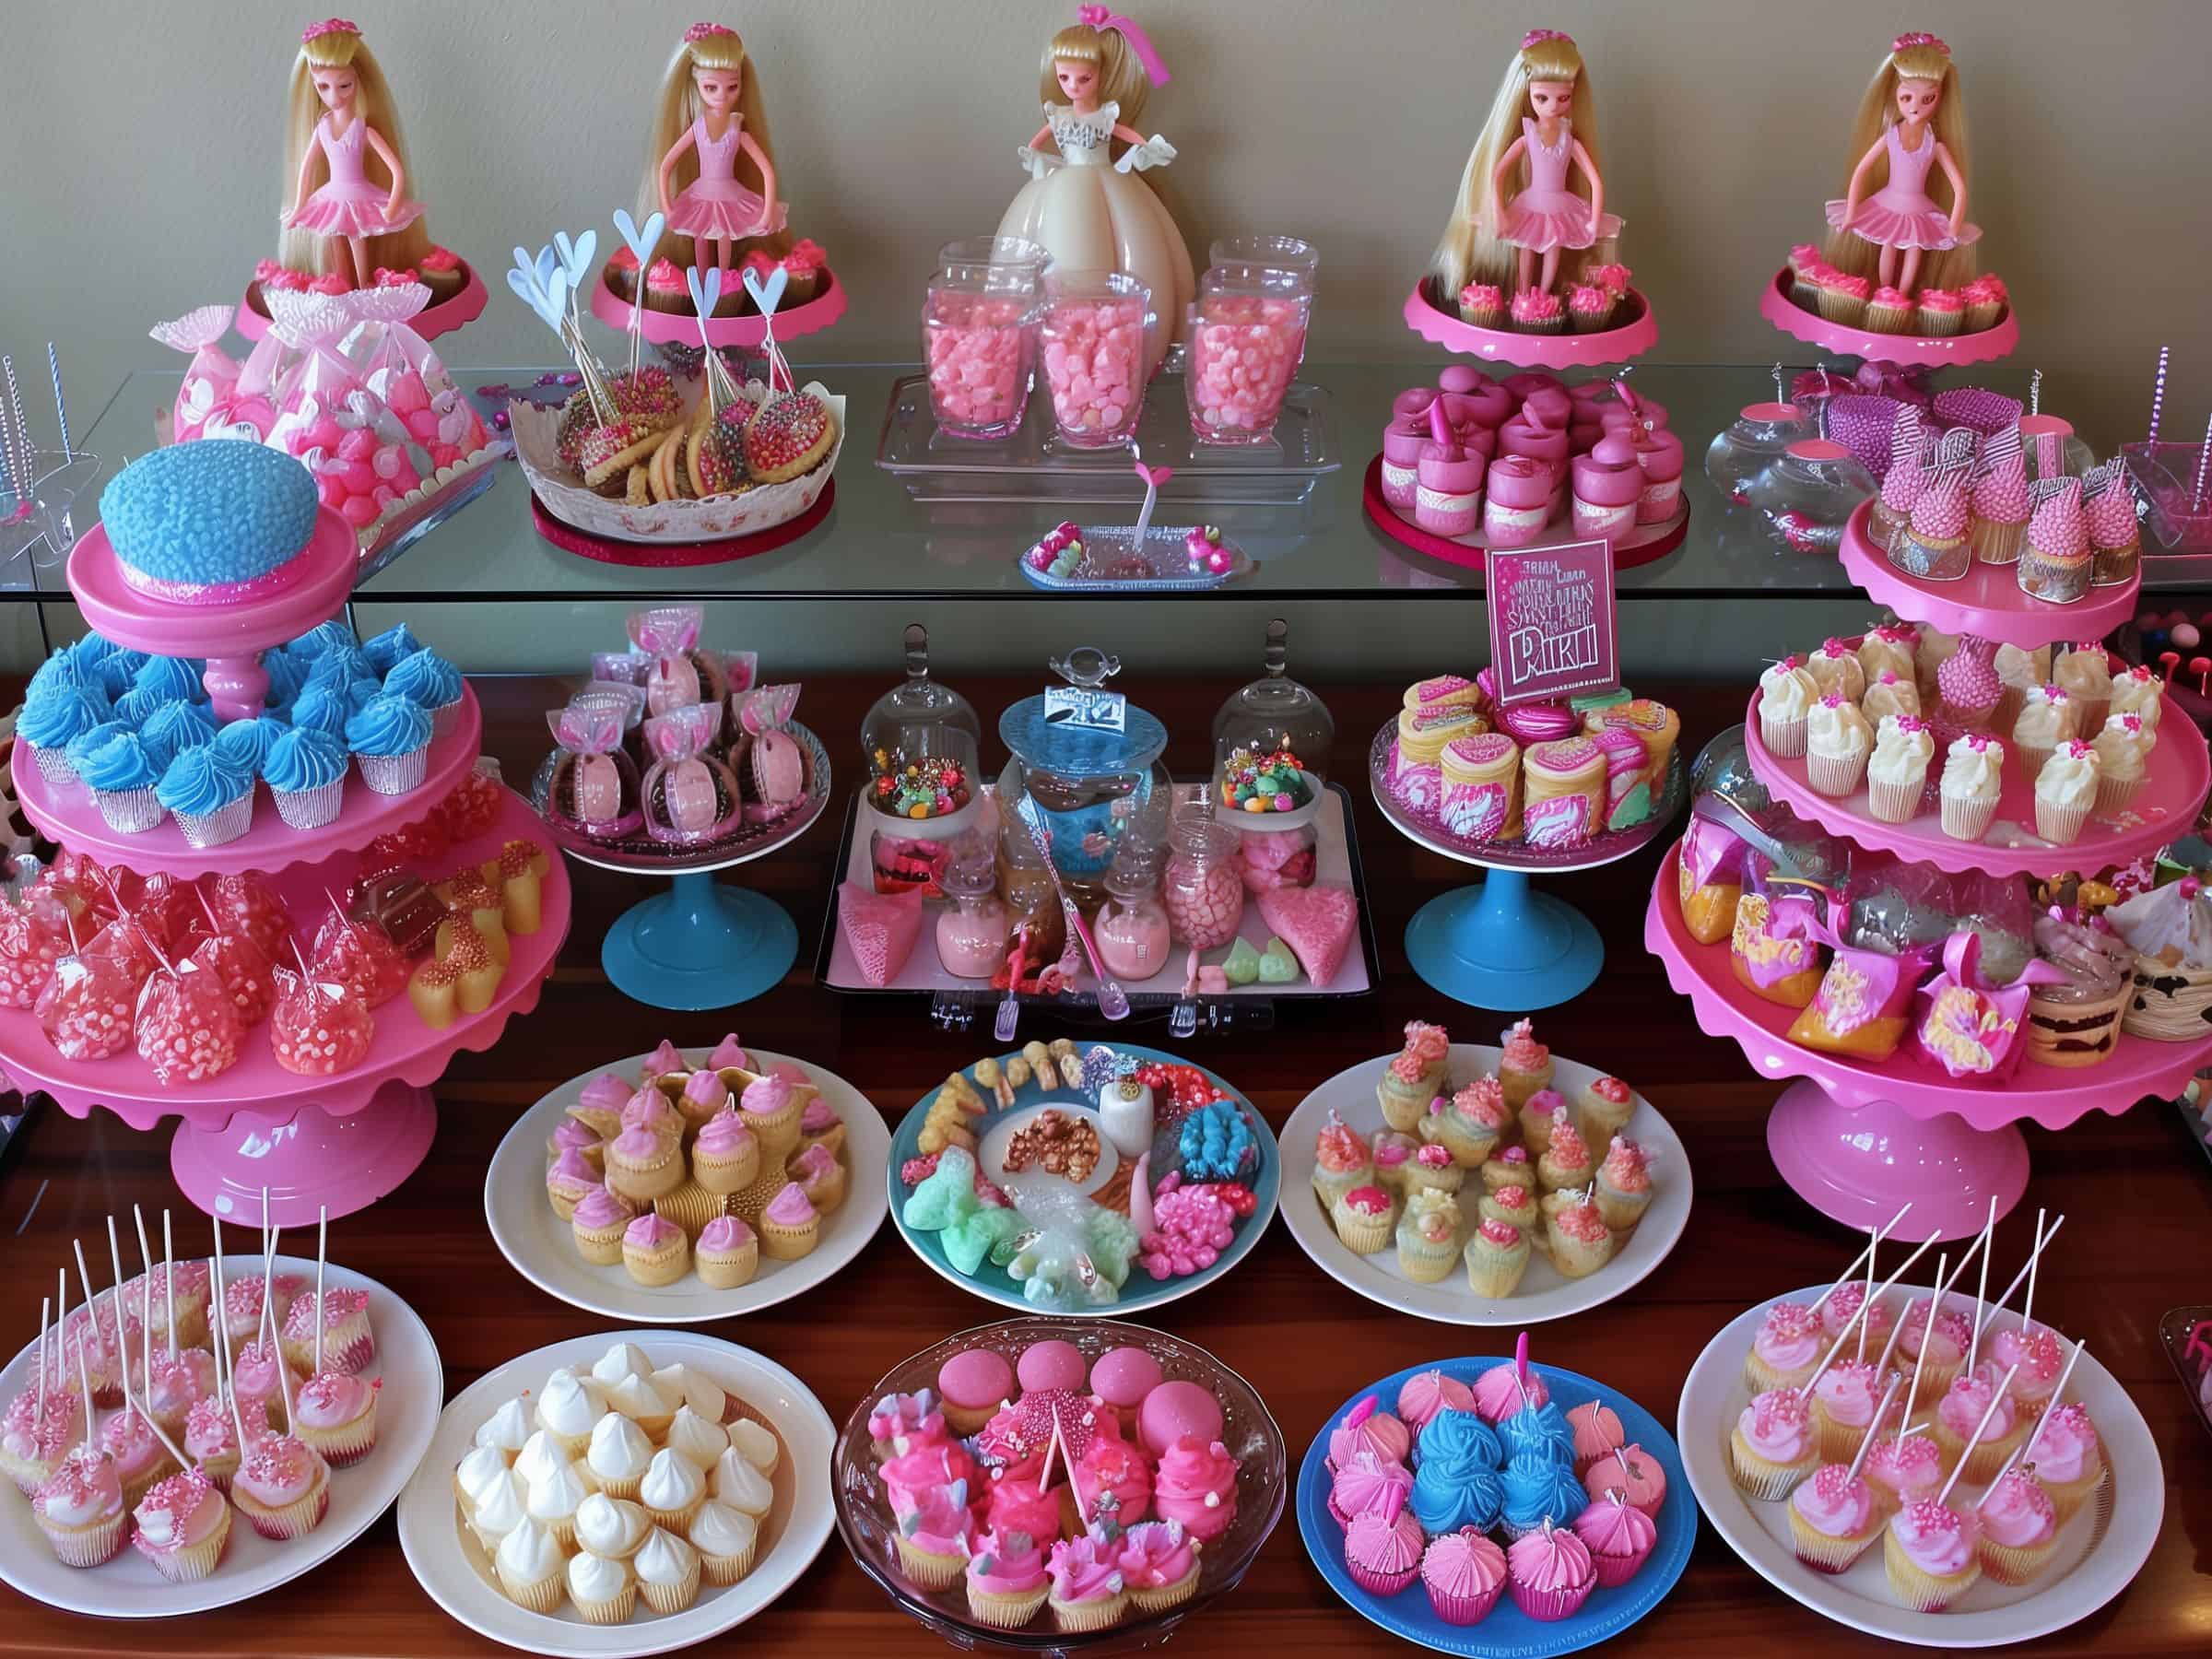 Barbie cake and sweet treats